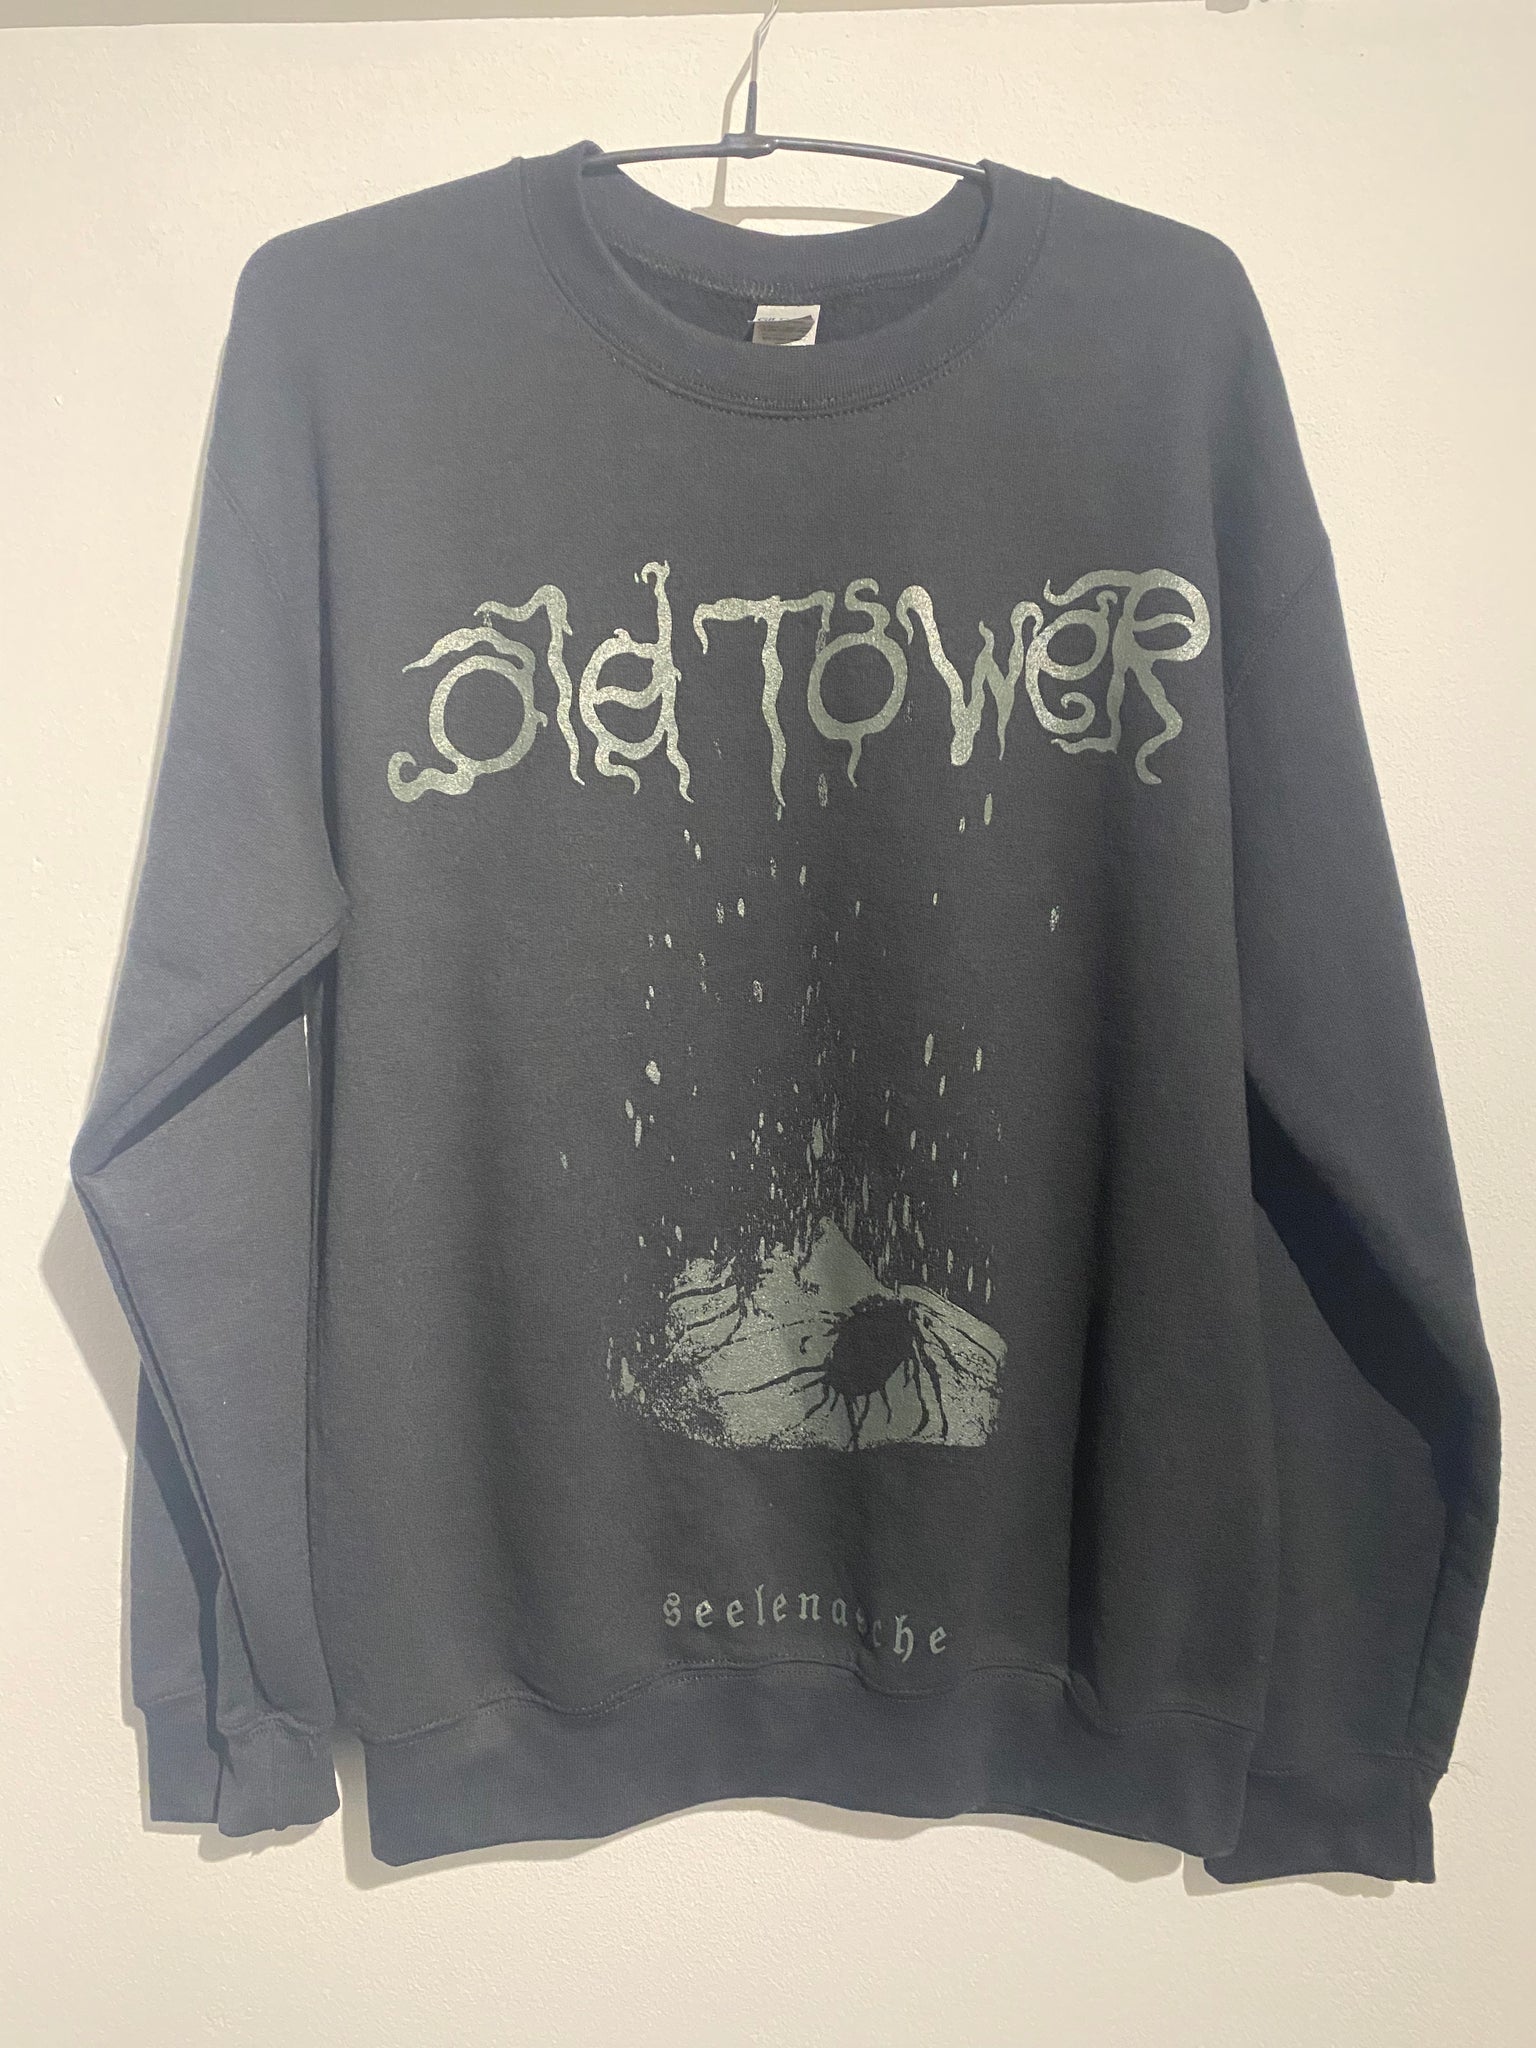 Old Tower - Seelenasche sweatshirt